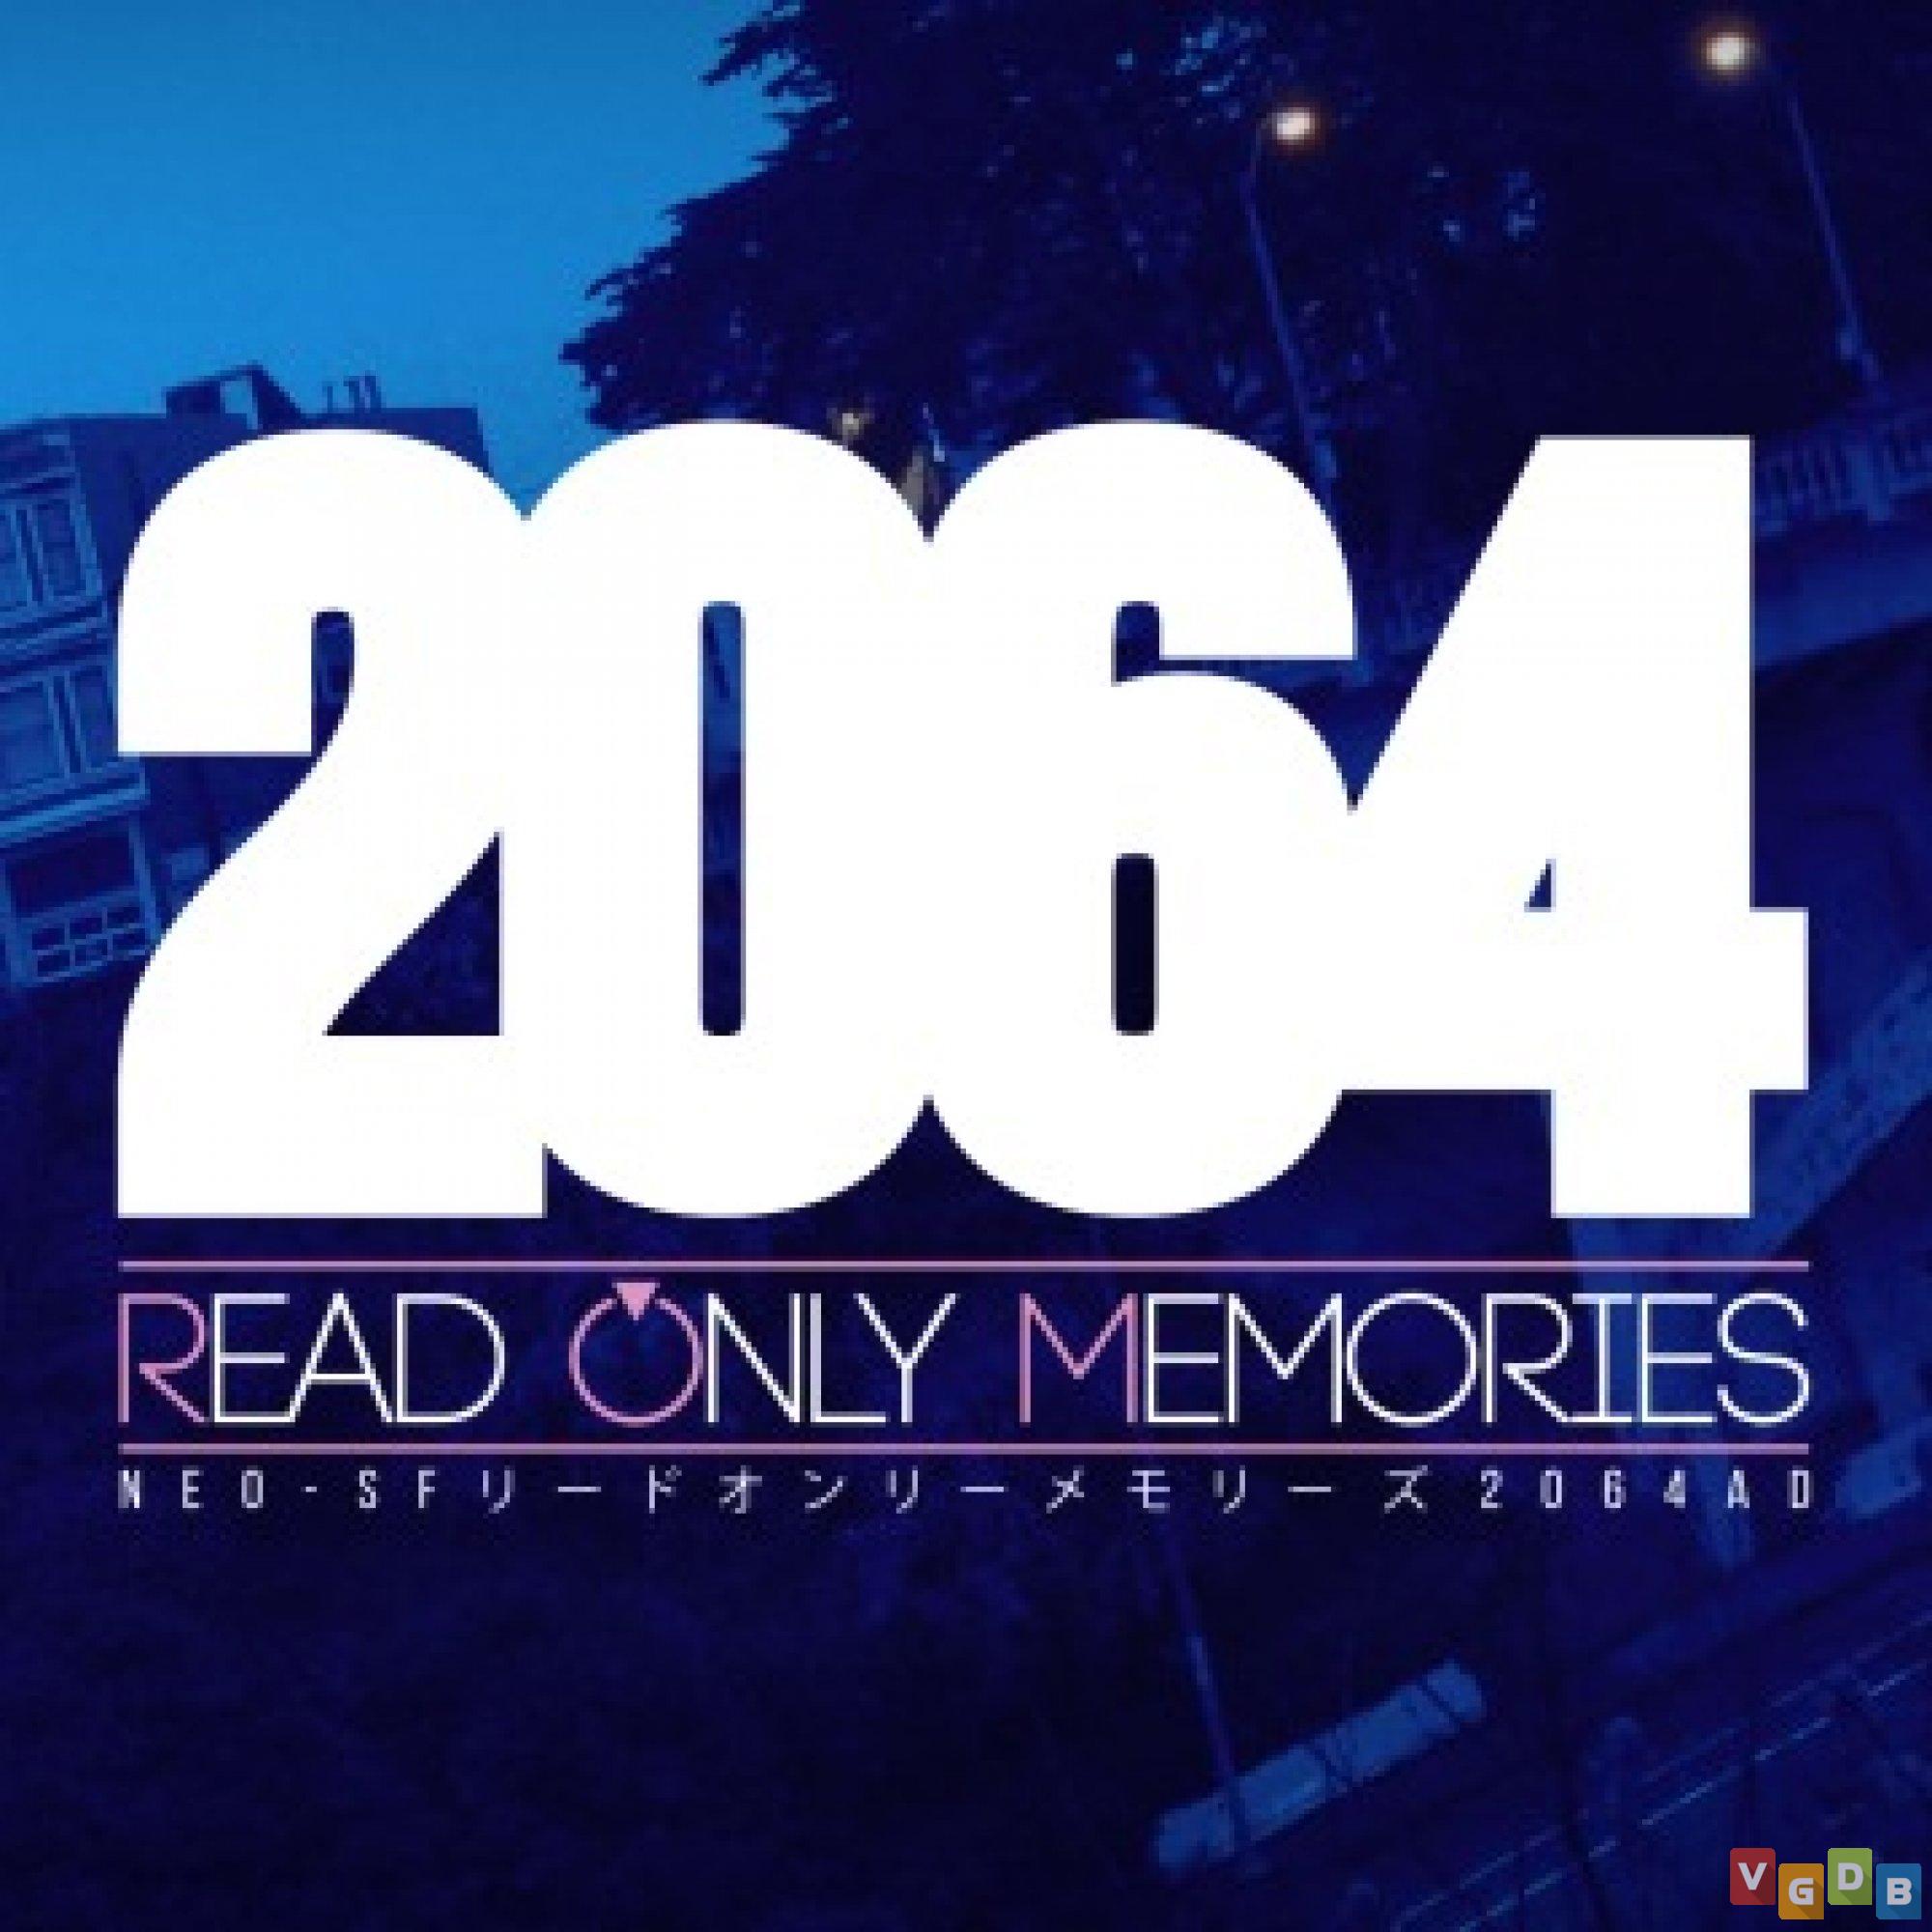 2064 read only memories ps vita